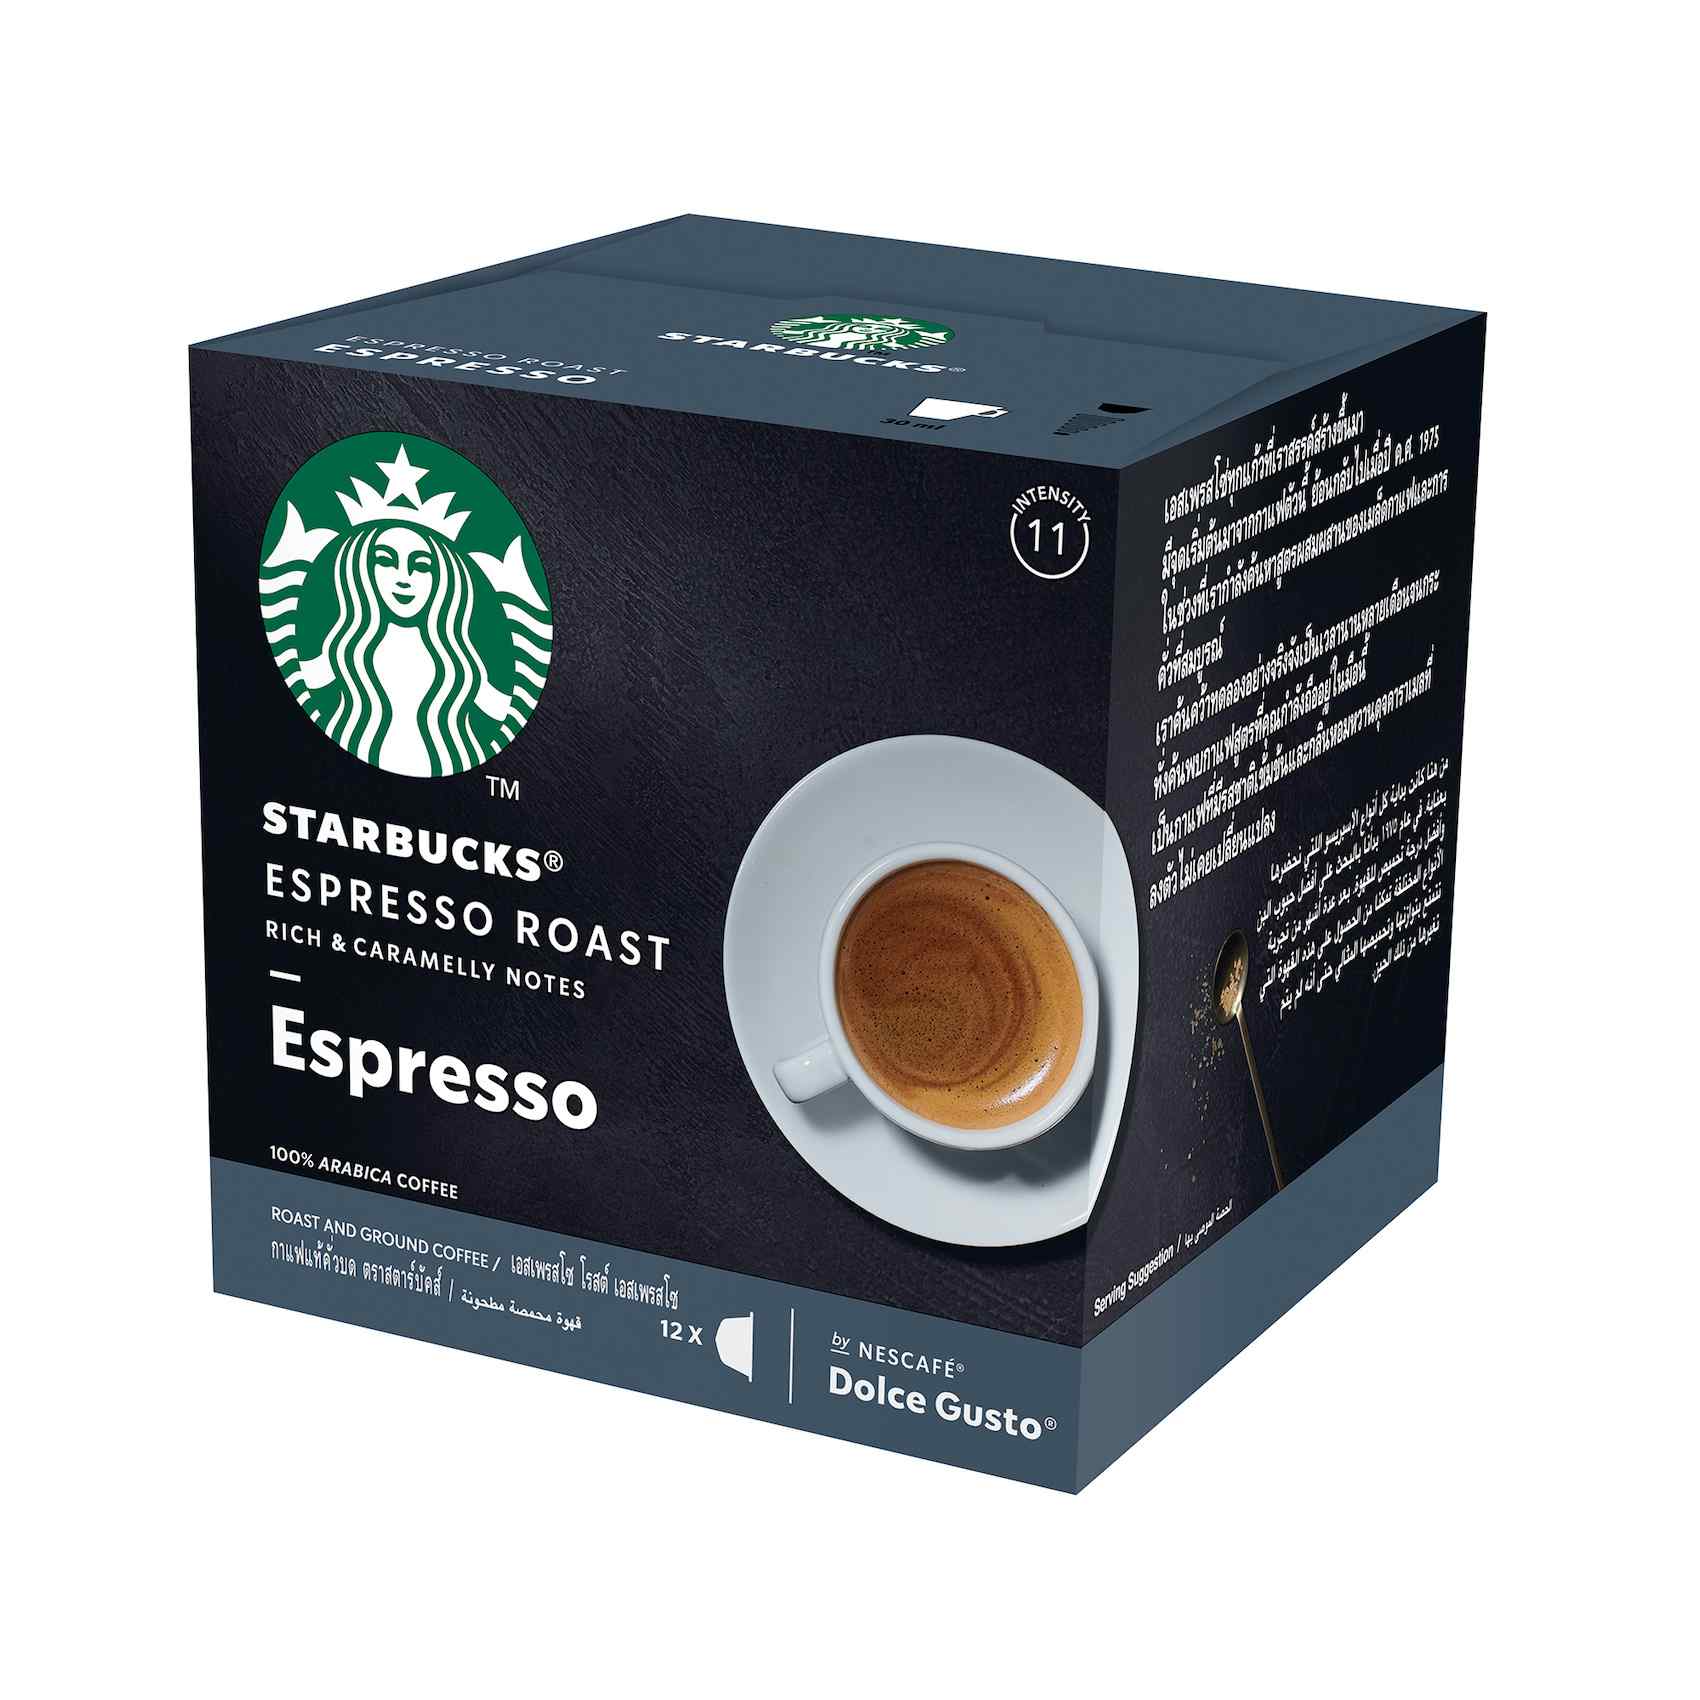 Starbucks Dolce Gusto Dark Espresso Roast Coffee 66g